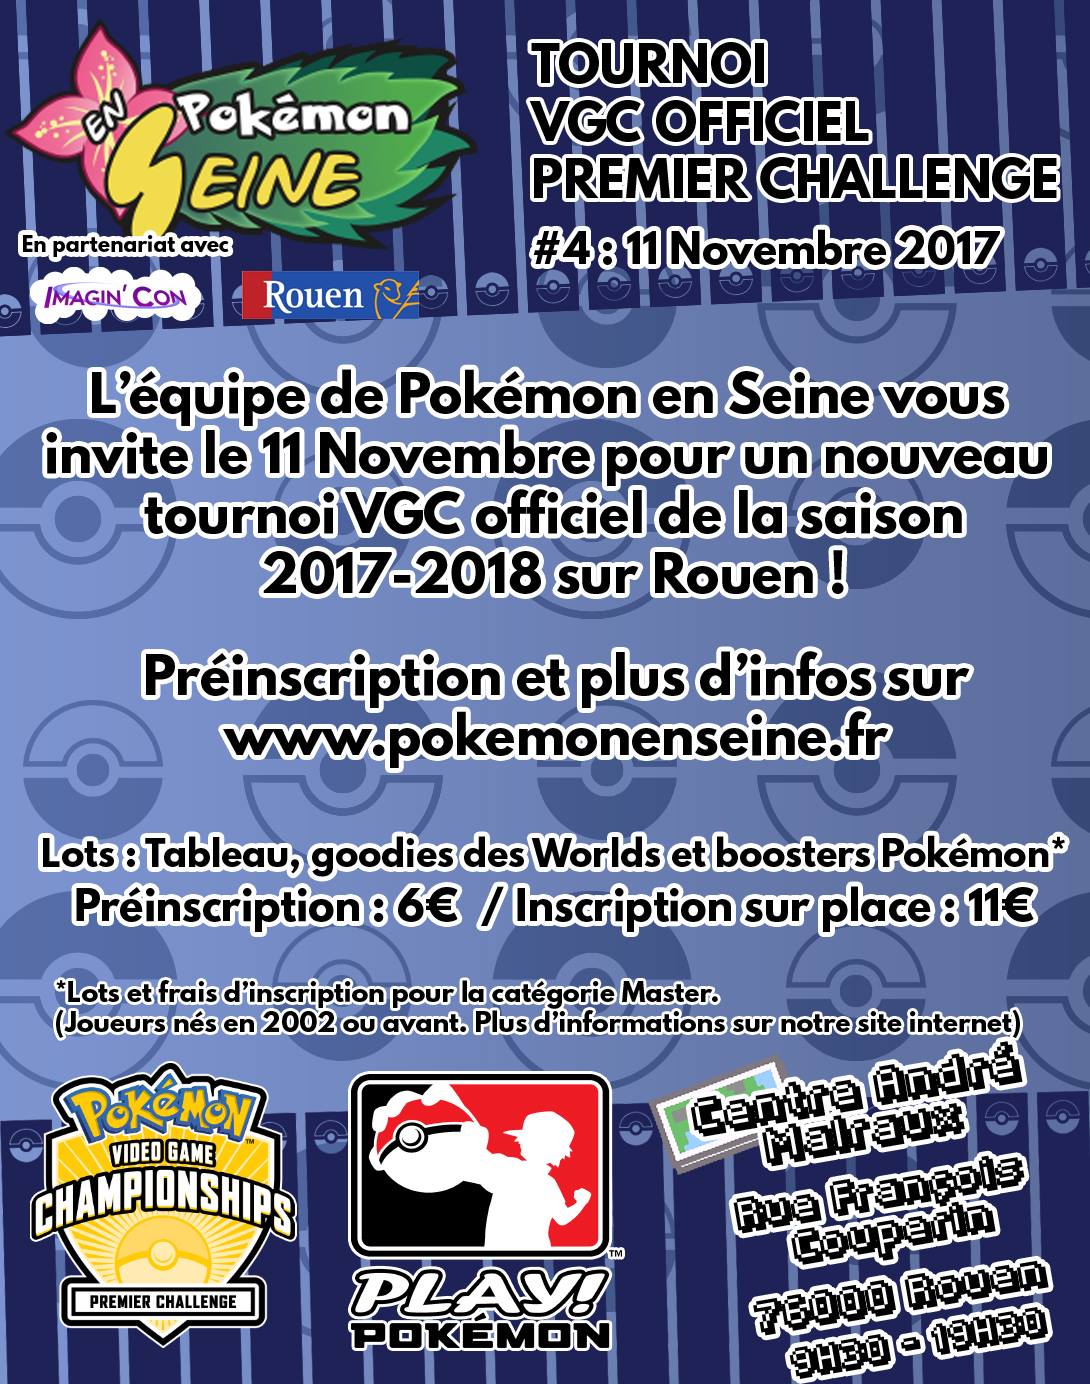 Tournoi VGC Pokémon en Seine le 11 Novembre prochain